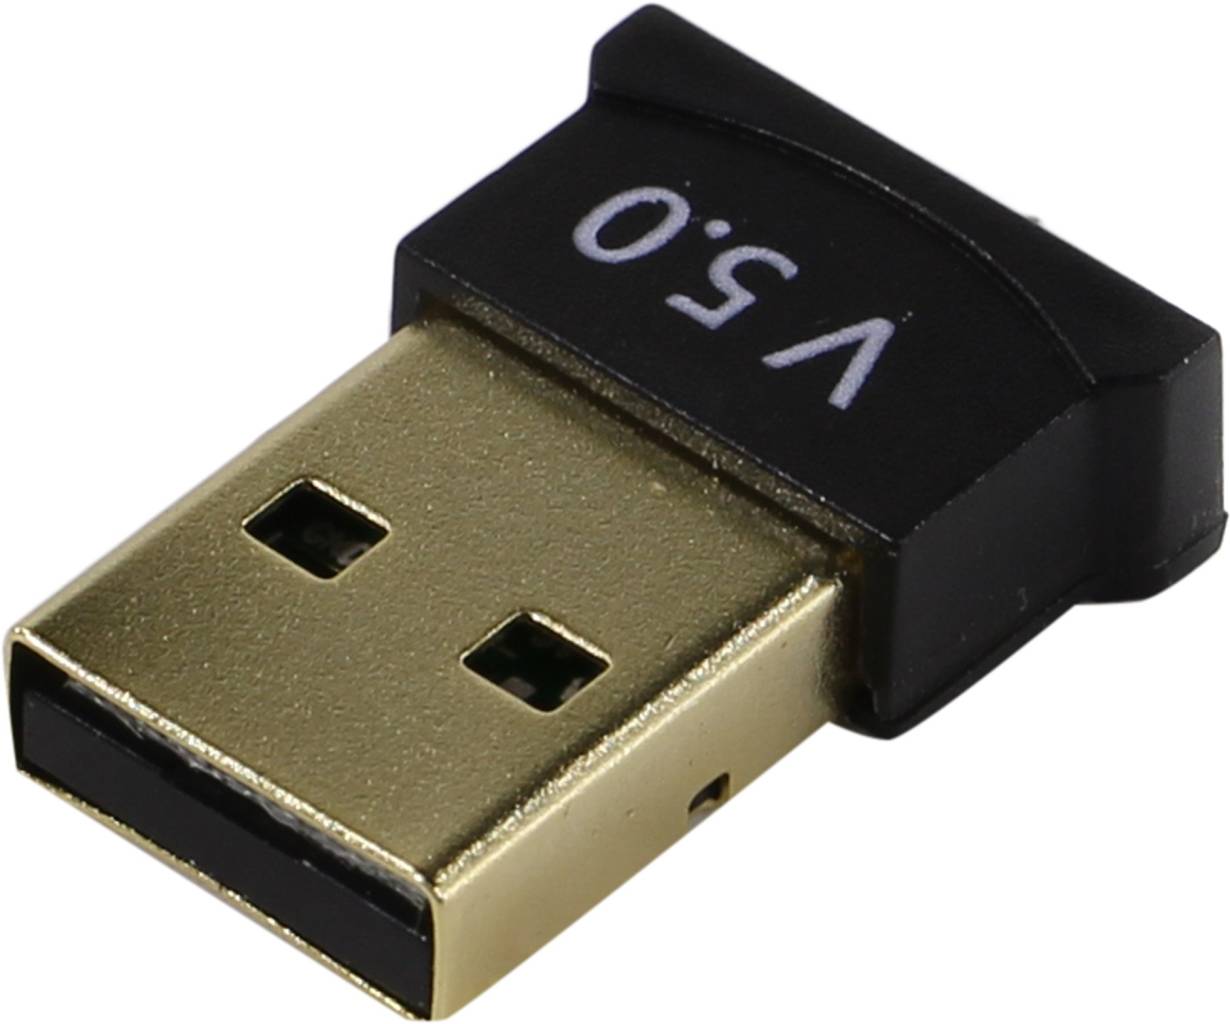   Bluetooth 5.0 USB Adapter KS-is [KS-408]